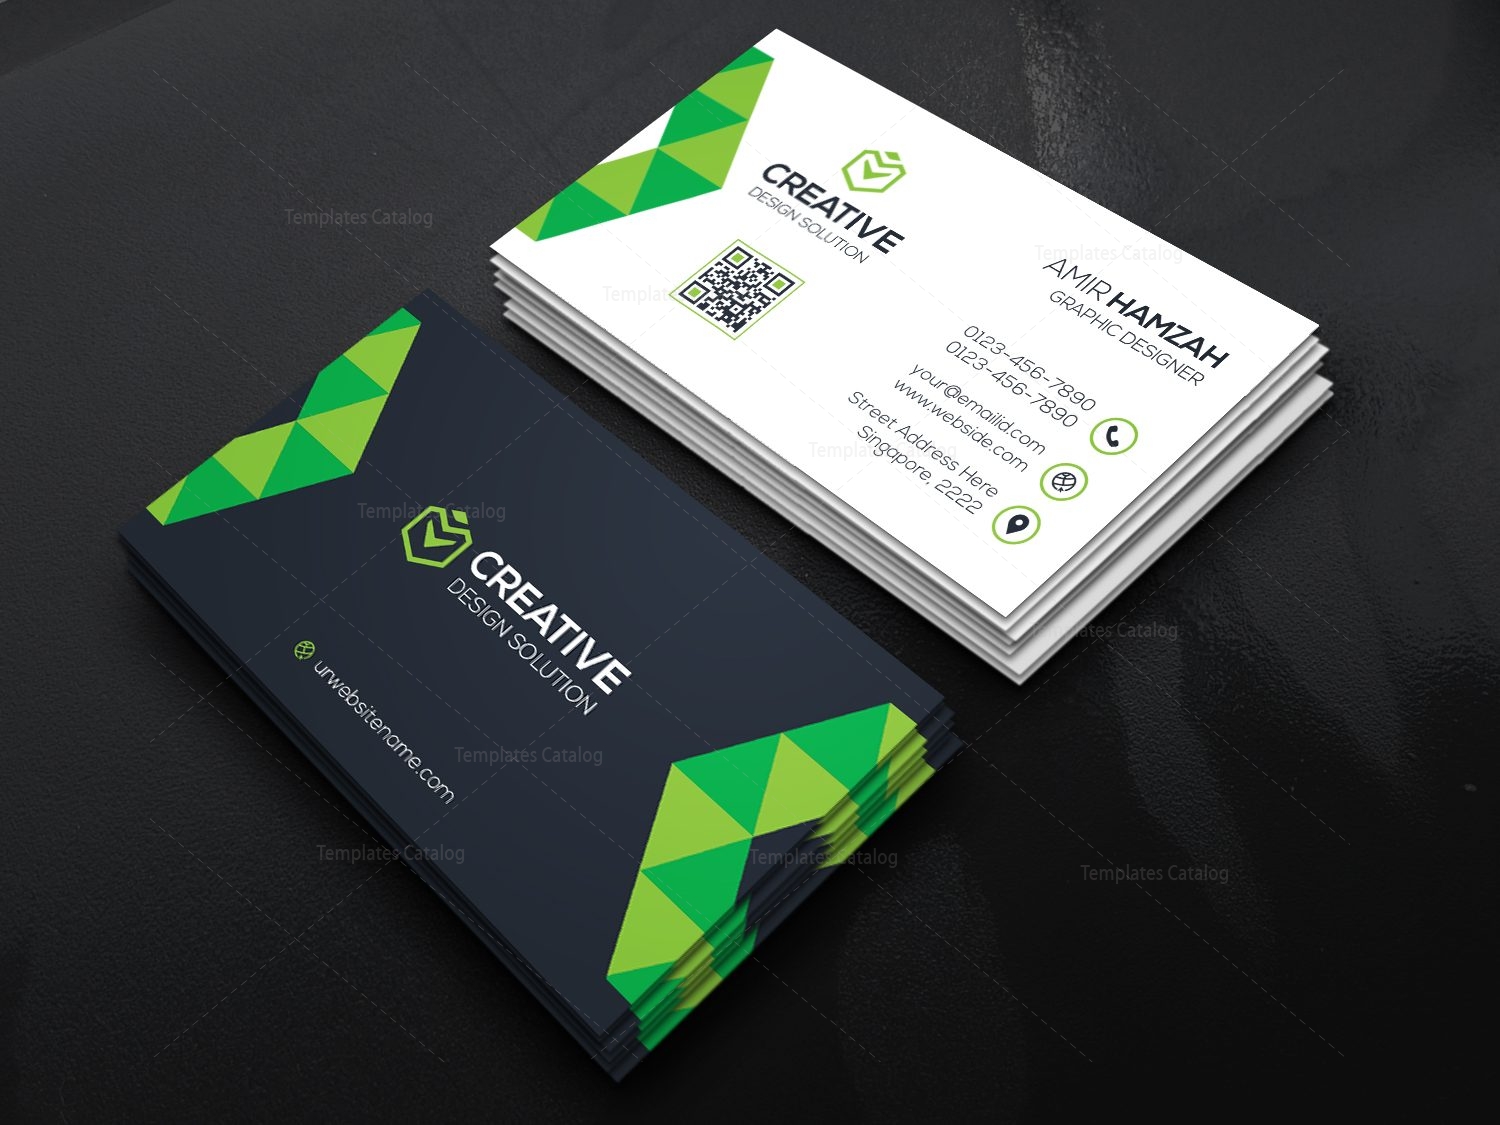 creative-business-card-design-000469-template-catalog